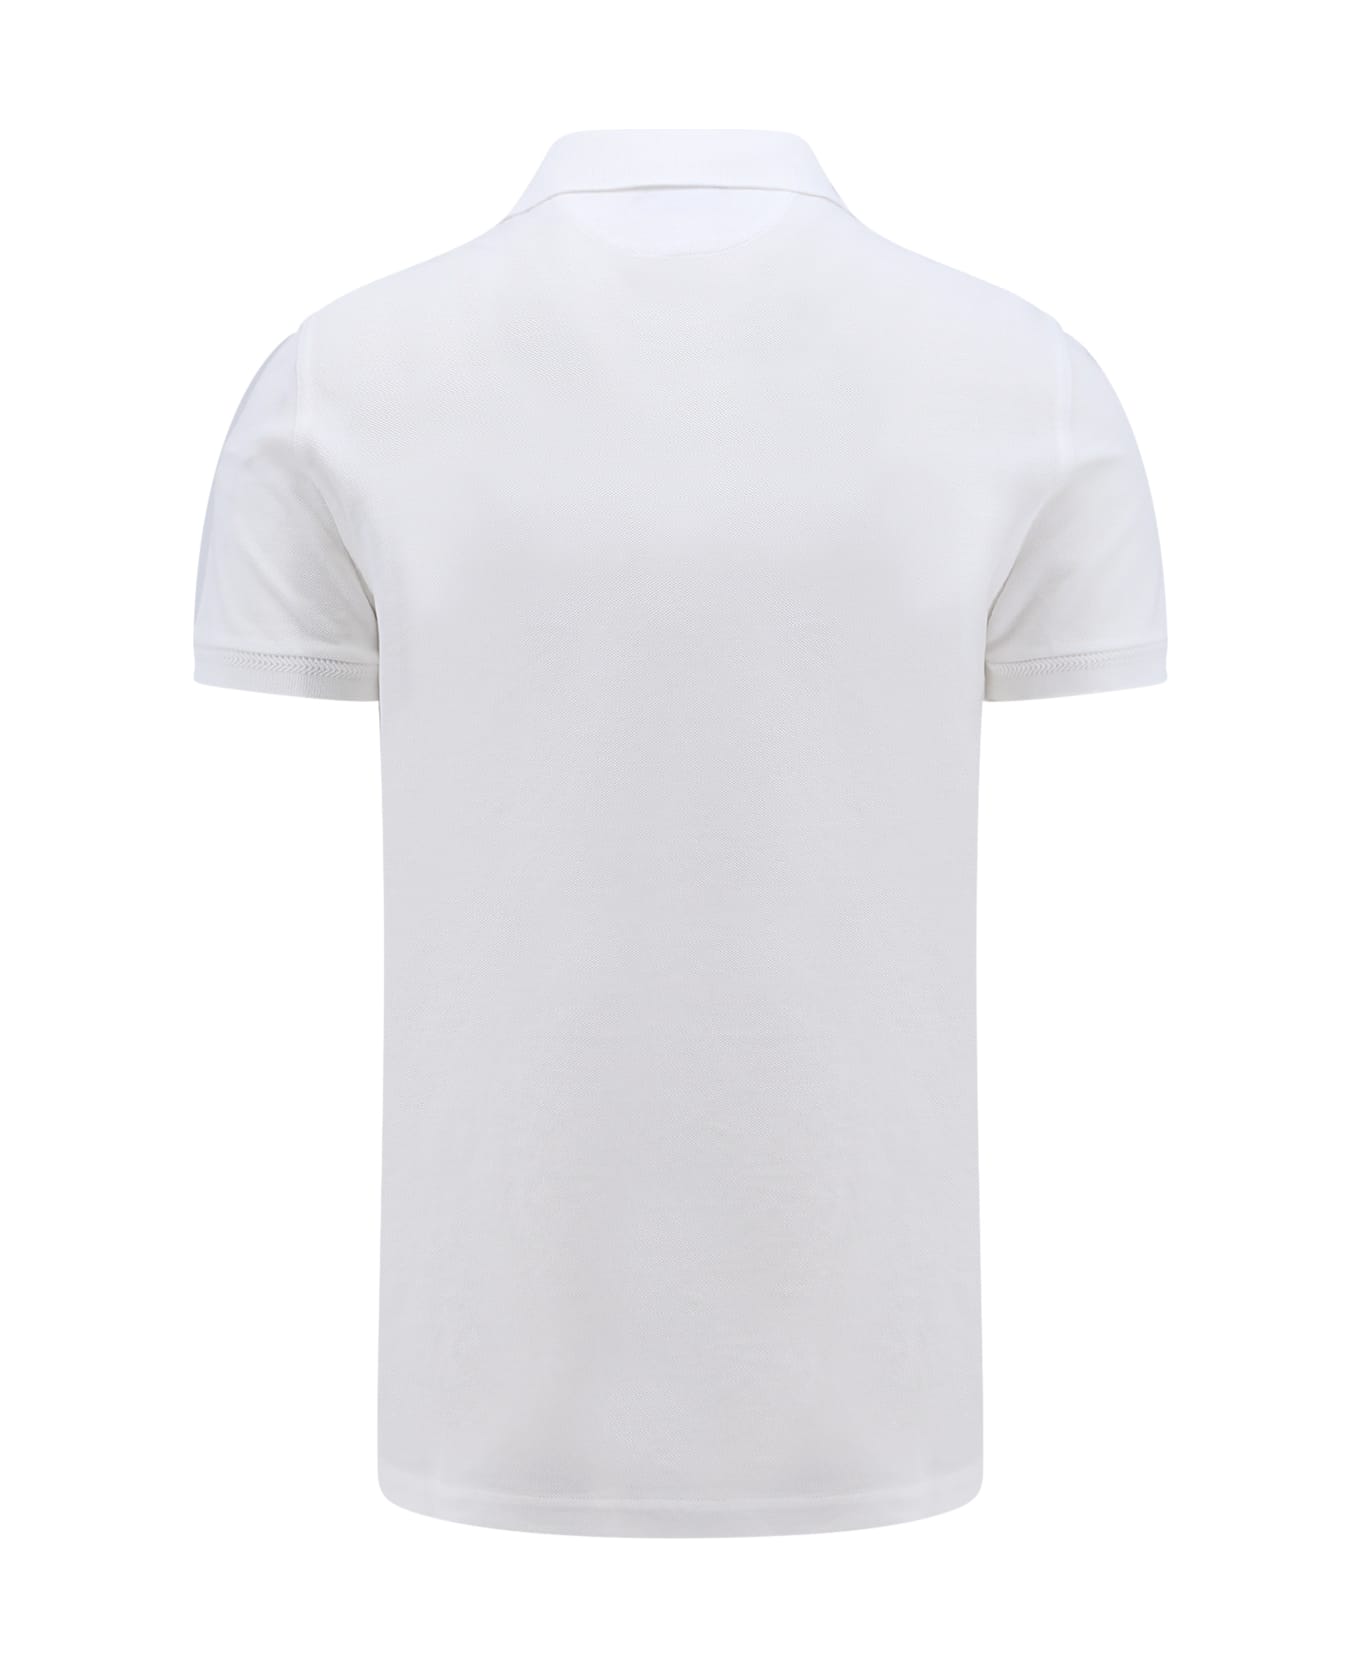 Tom Ford Polo Shirt - White